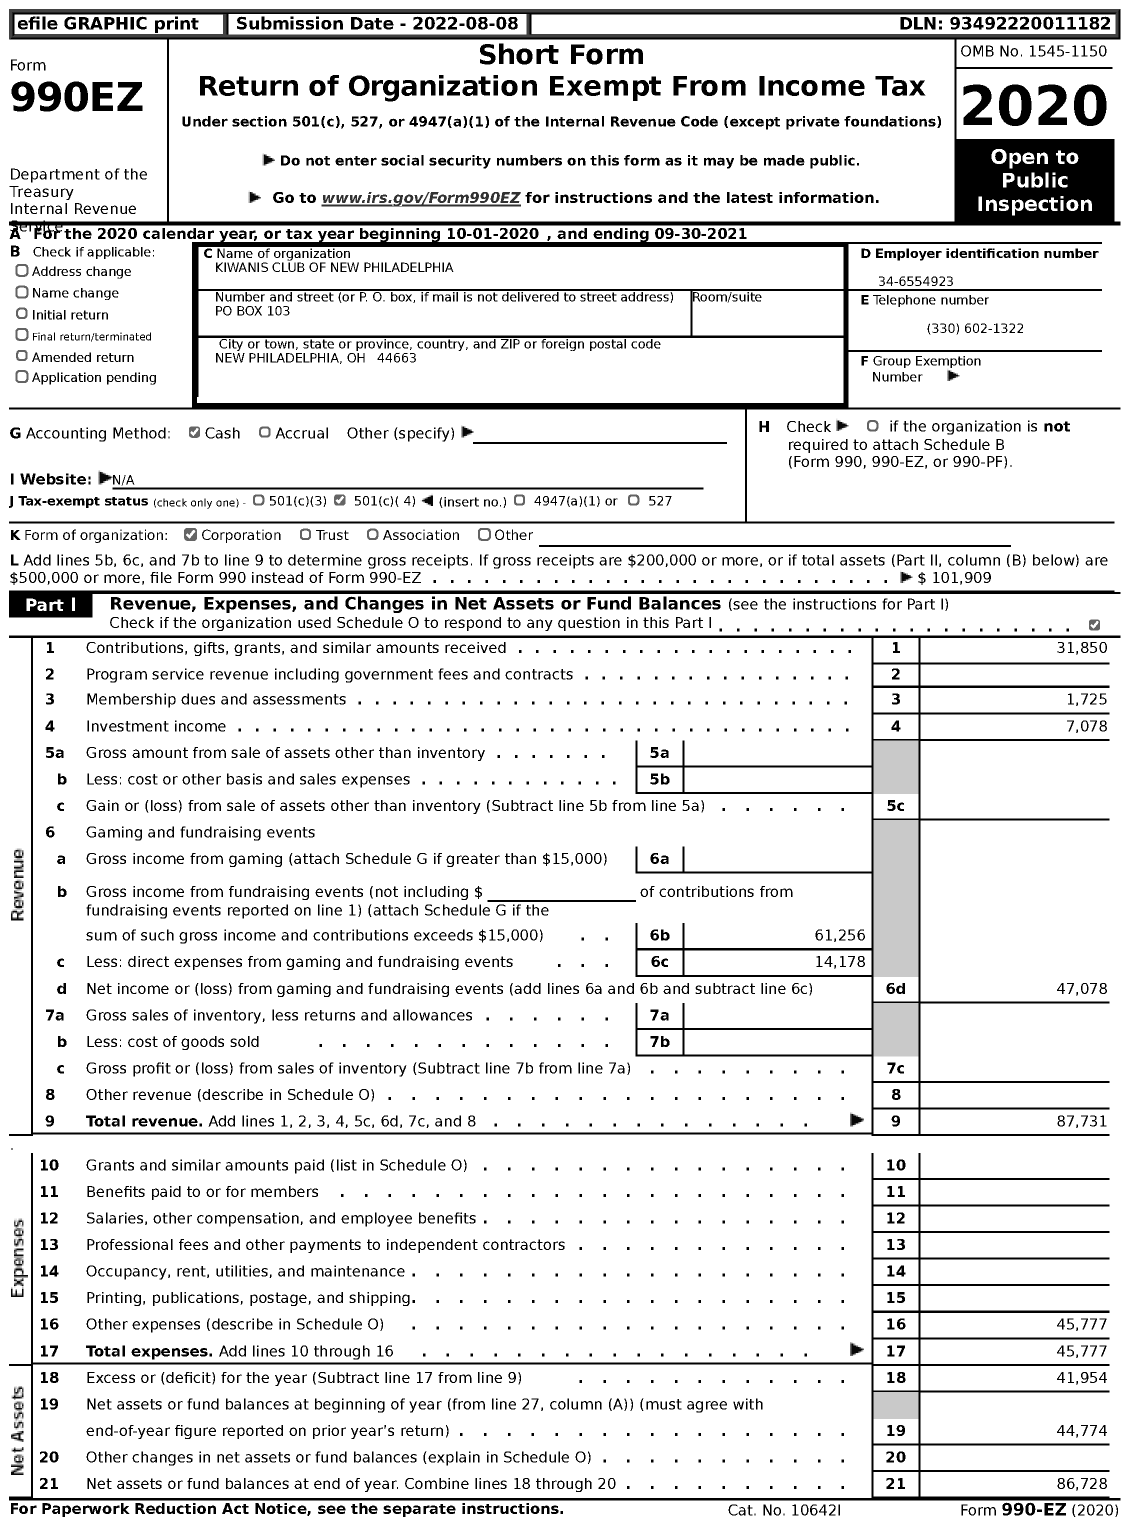 Image of first page of 2020 Form 990EZ for Kiwanis International - K00393 New Philadelphia